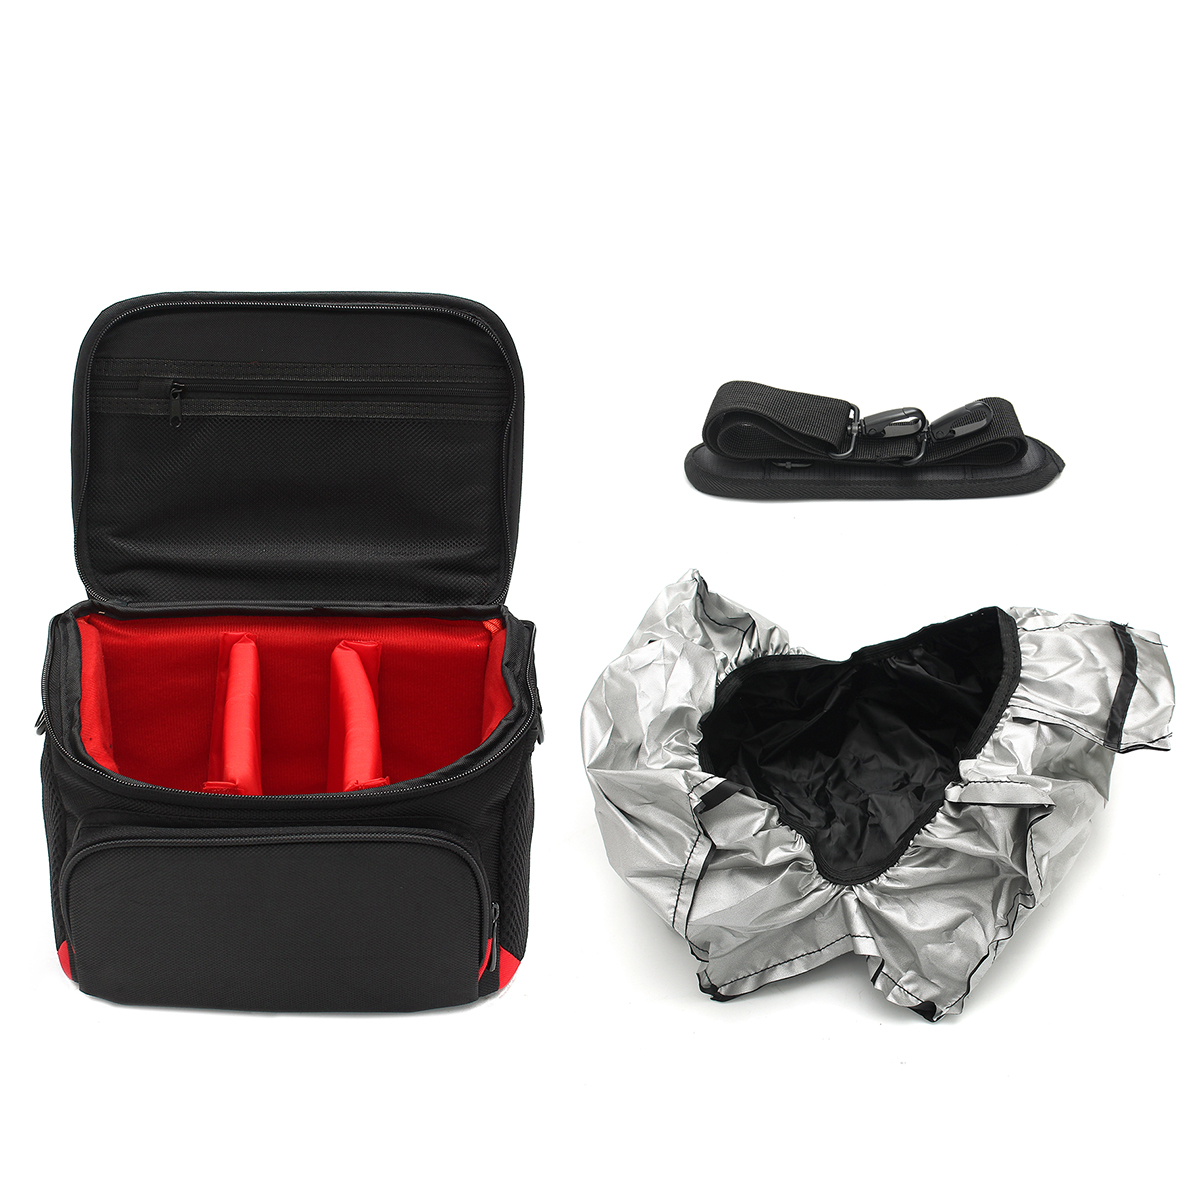 Waterproof-Camera-Shoulder-Bag-Travel-Carrying-Case-with-Rain-Cover-For-DSLR-SLR-Camera-Flash-Lens-1633799-10